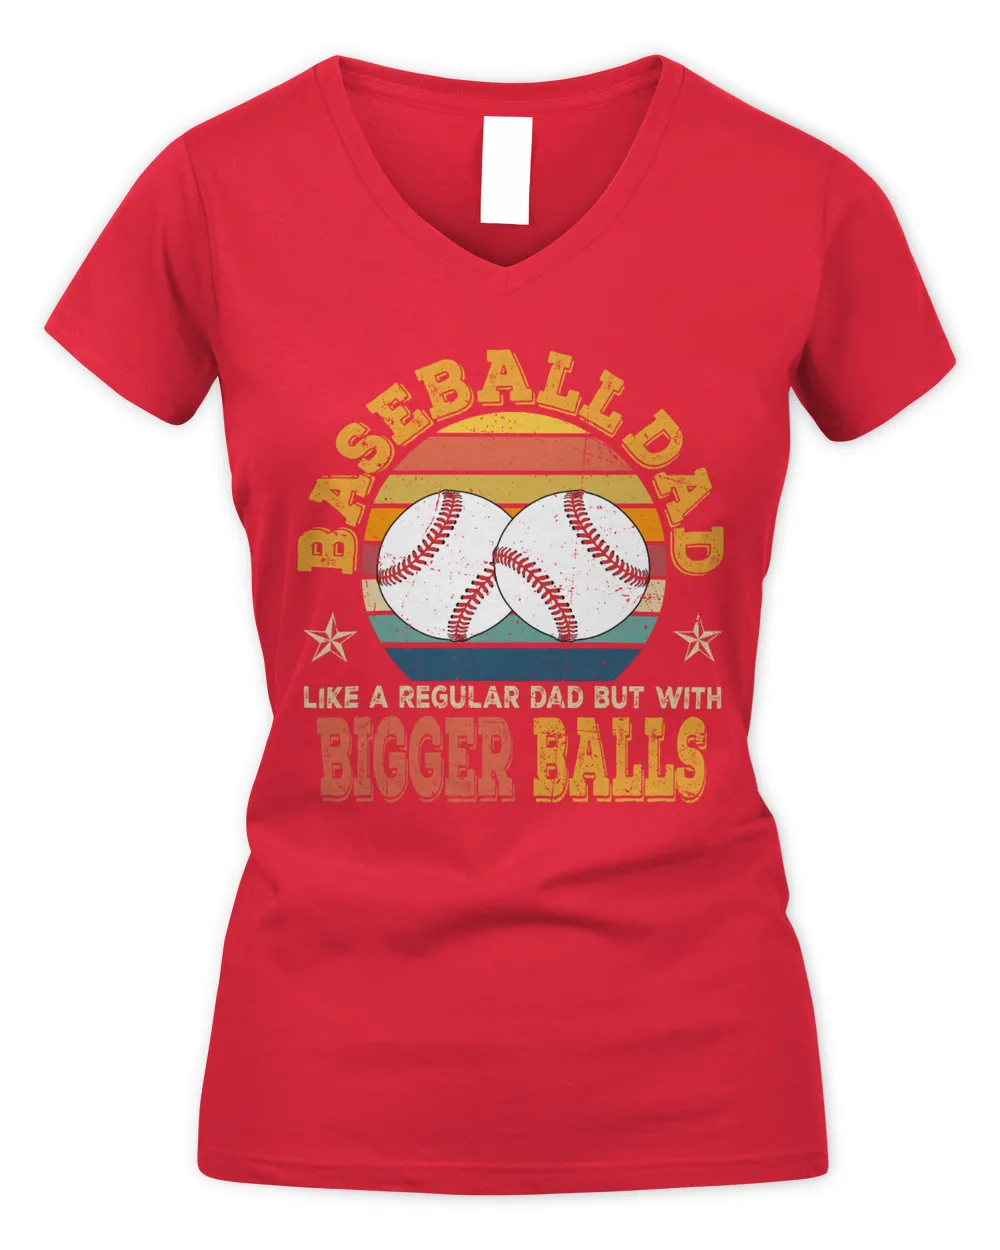 Baseball dad bigger balls